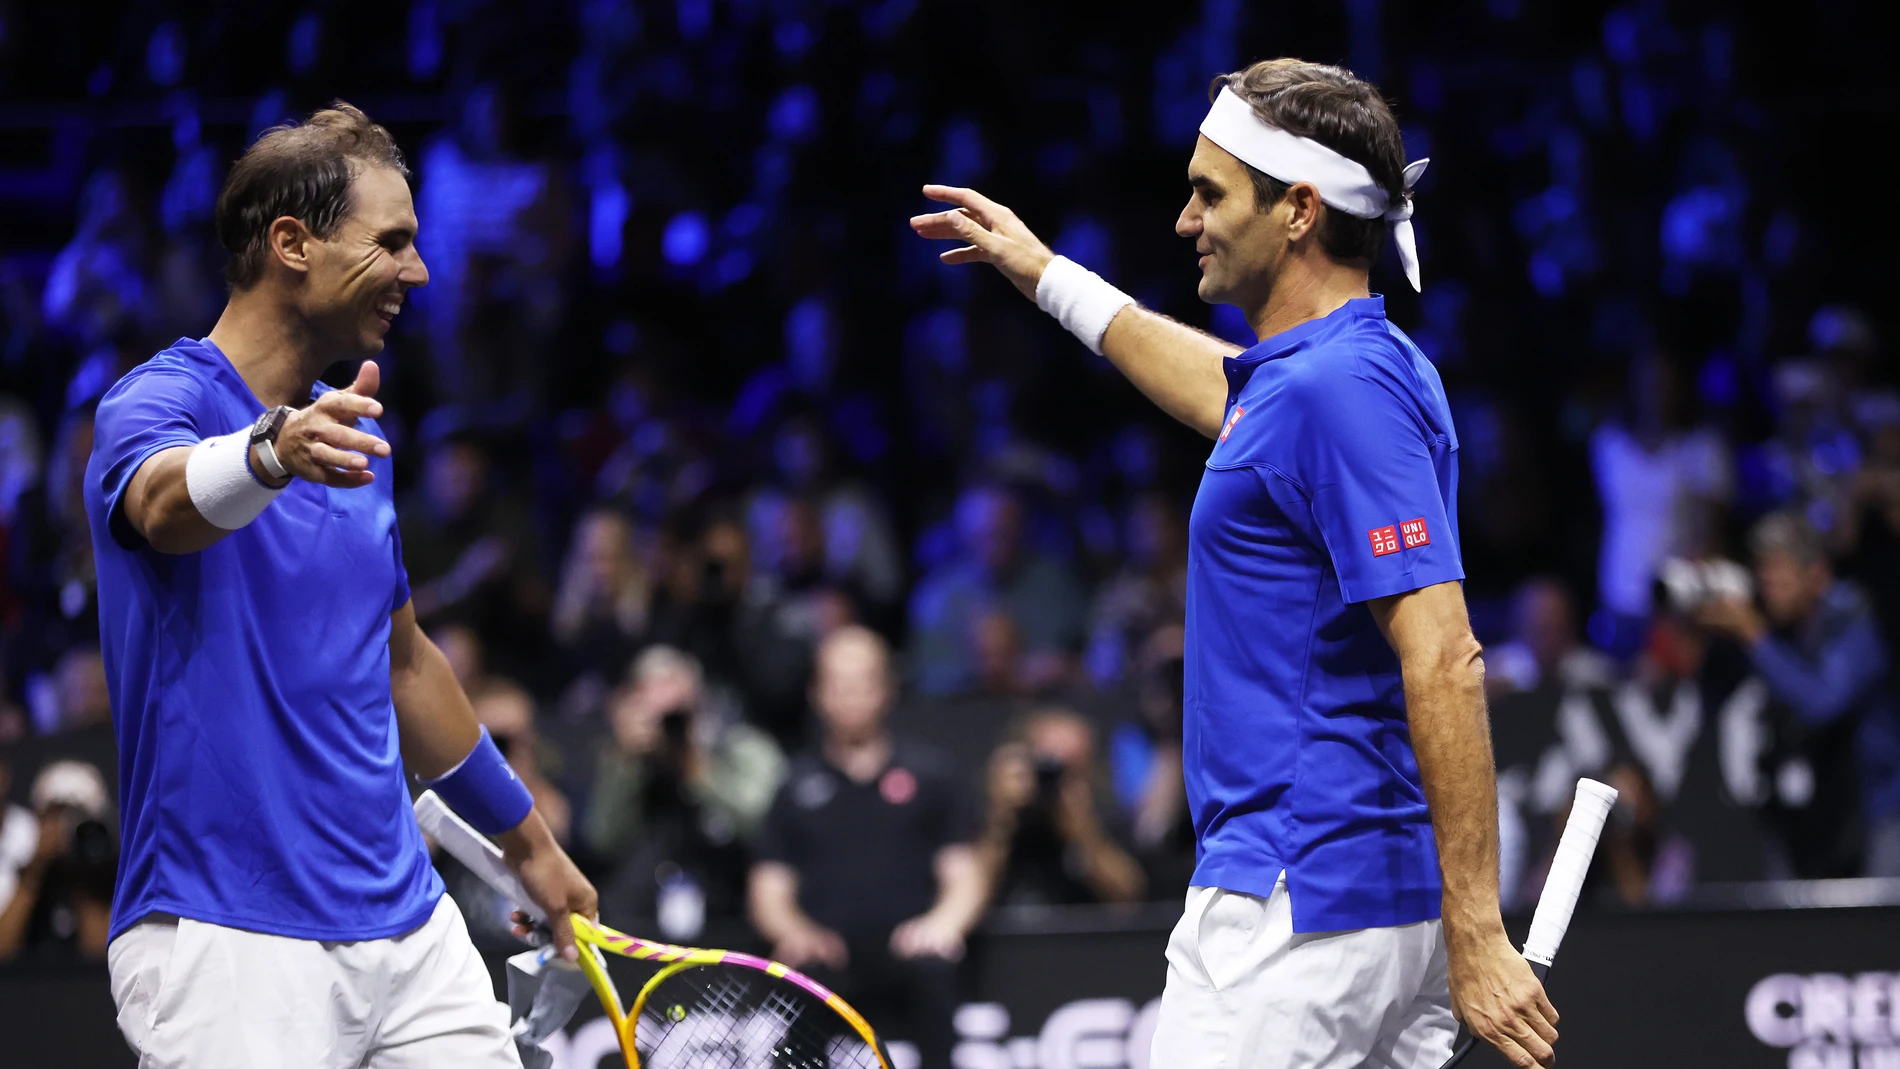 Roger Federer y Rafa Nadal